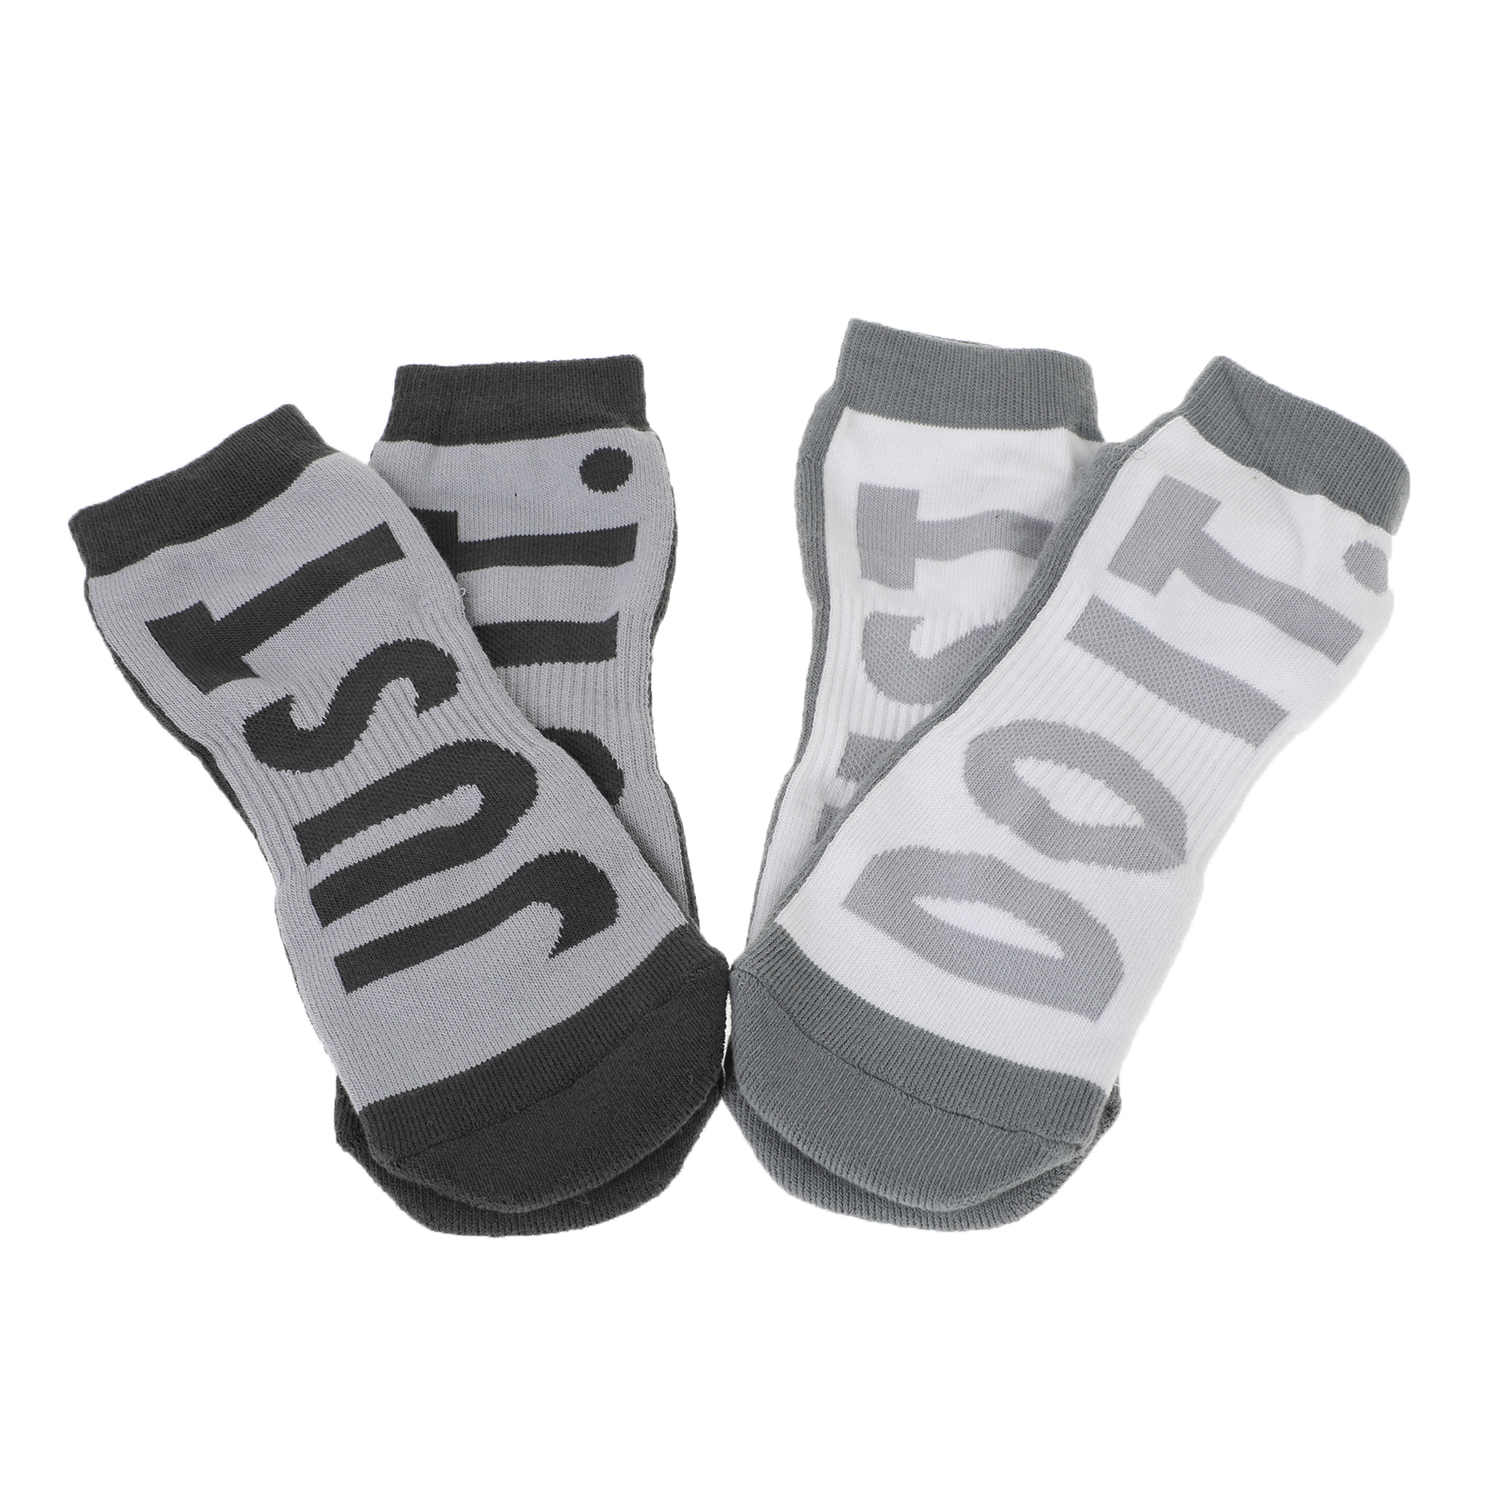 NIKE – Σετ από 2 ζευγάρια ανδρικές κάλτσες Nike Sportswear No-Show γκρι-λευκές 1552680.1-0202